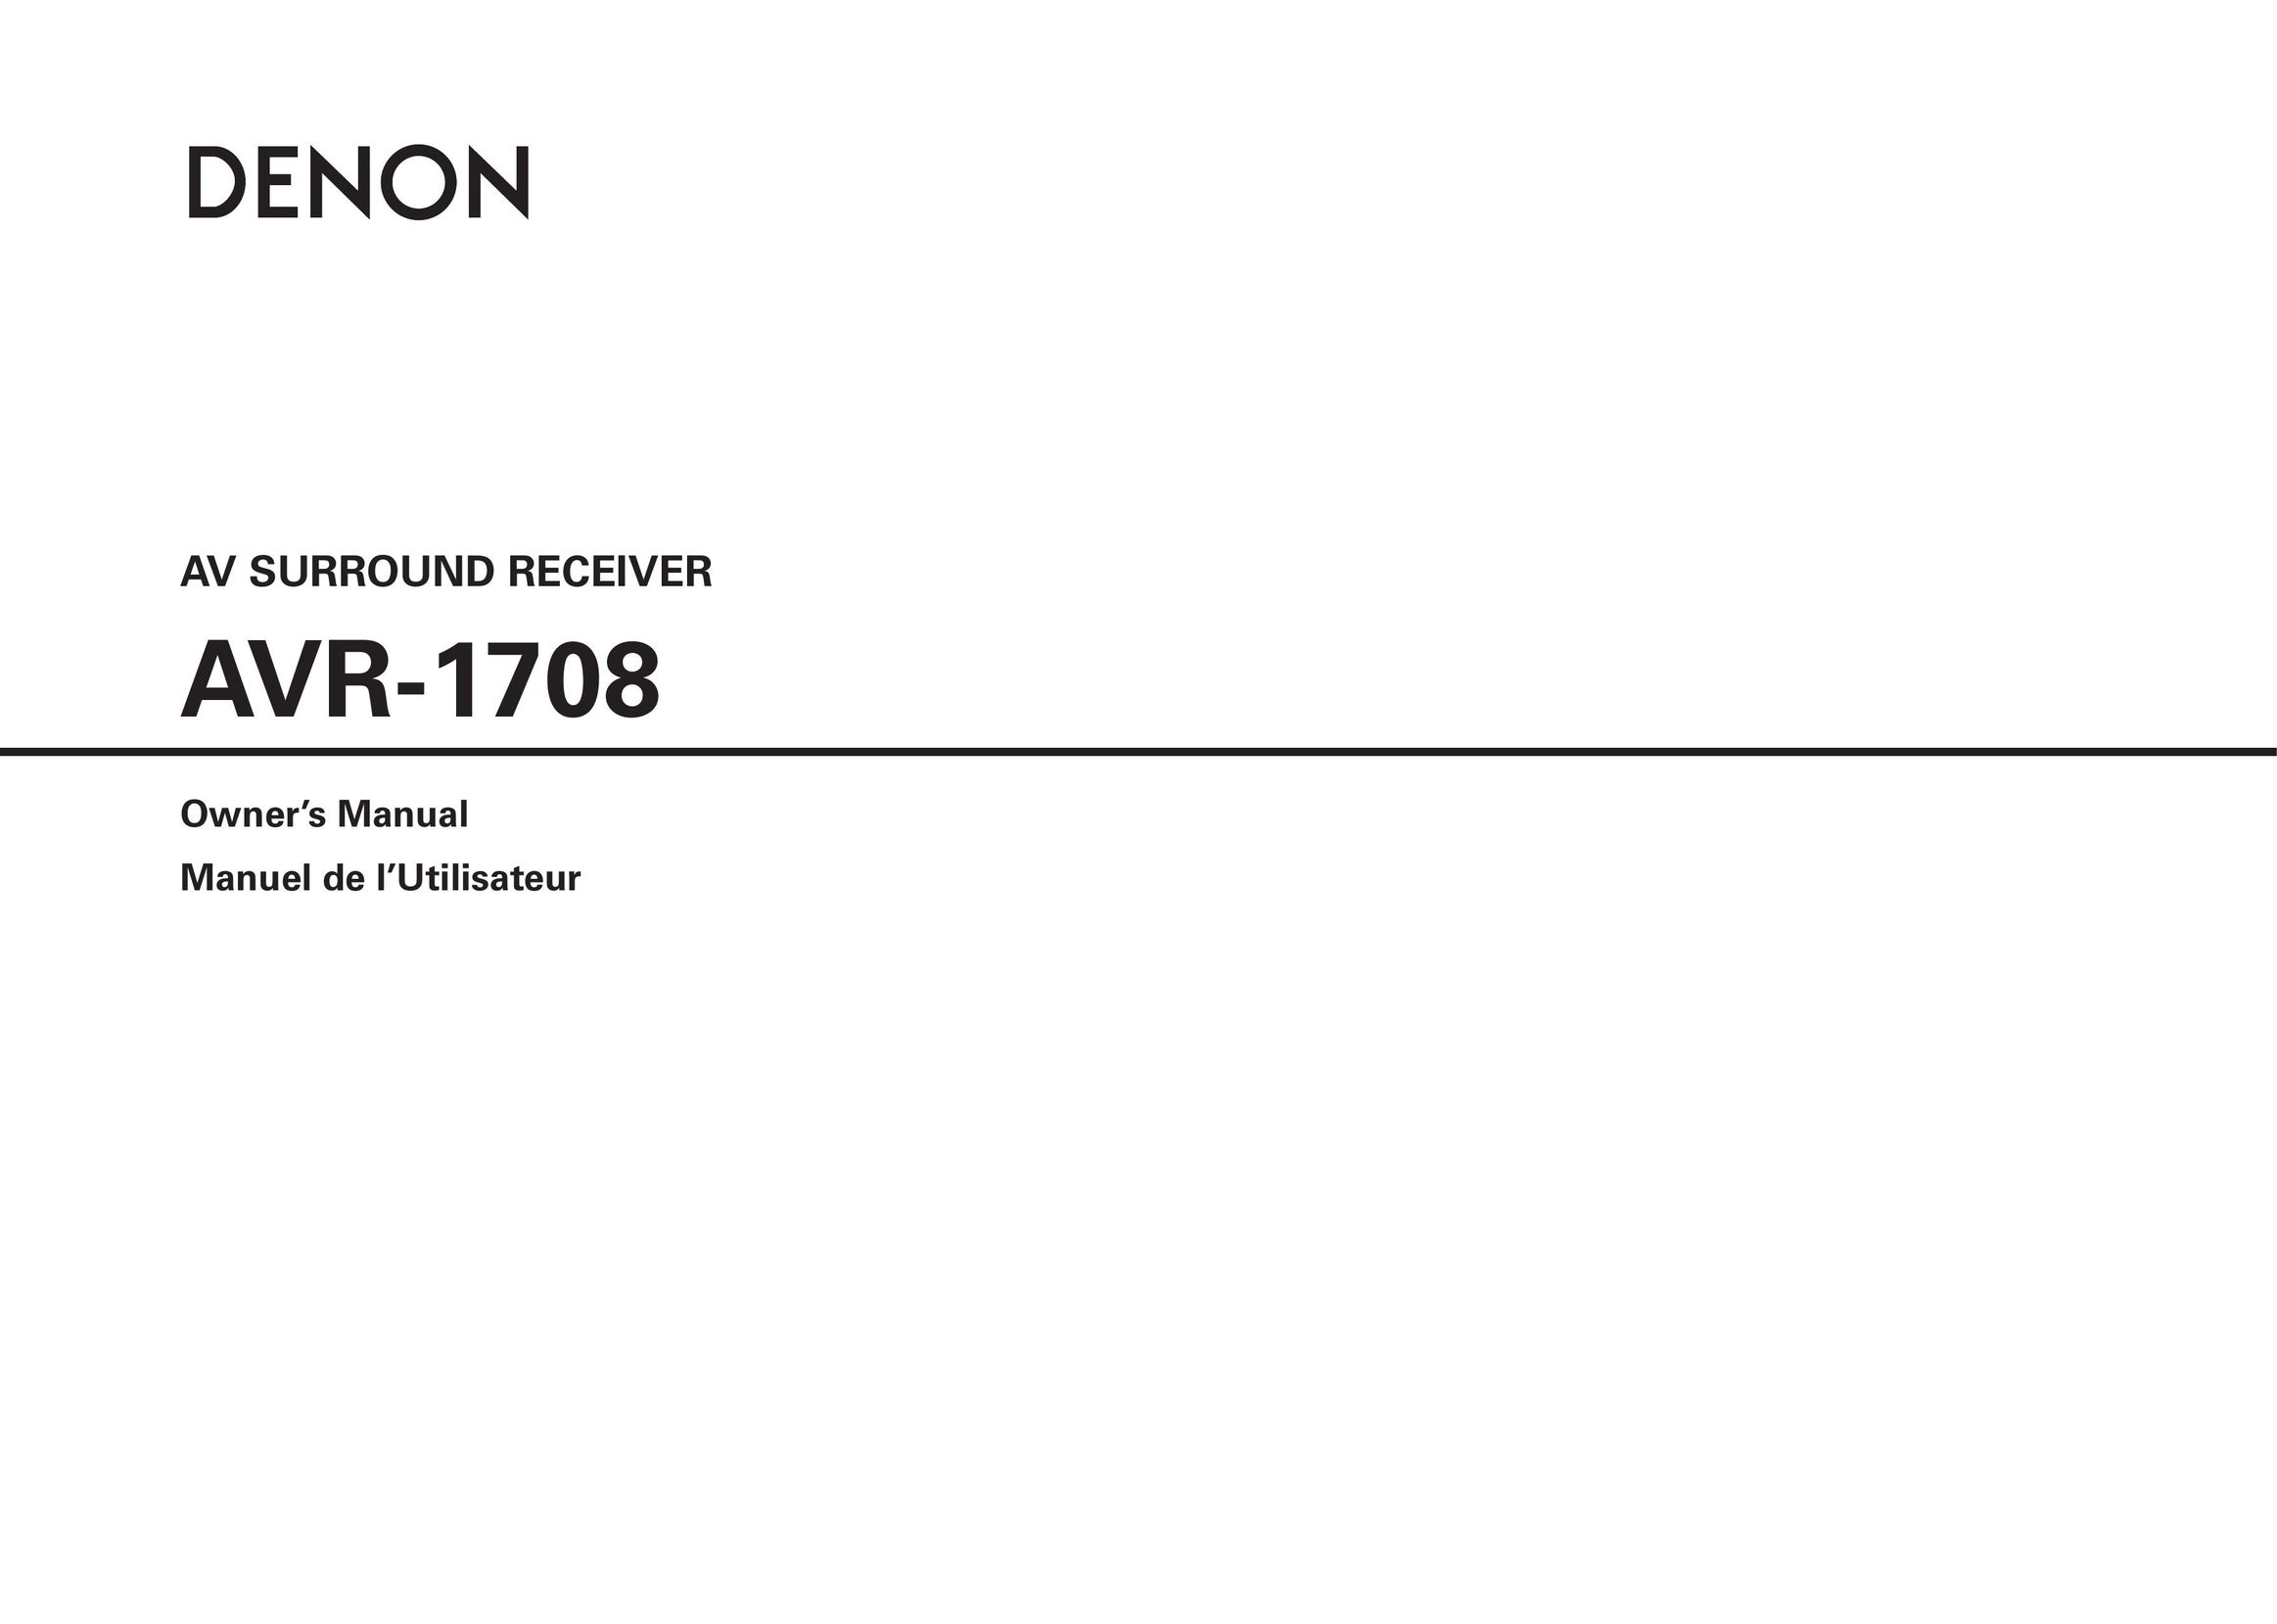 Denon AVR-1708 Stereo Receiver User Manual